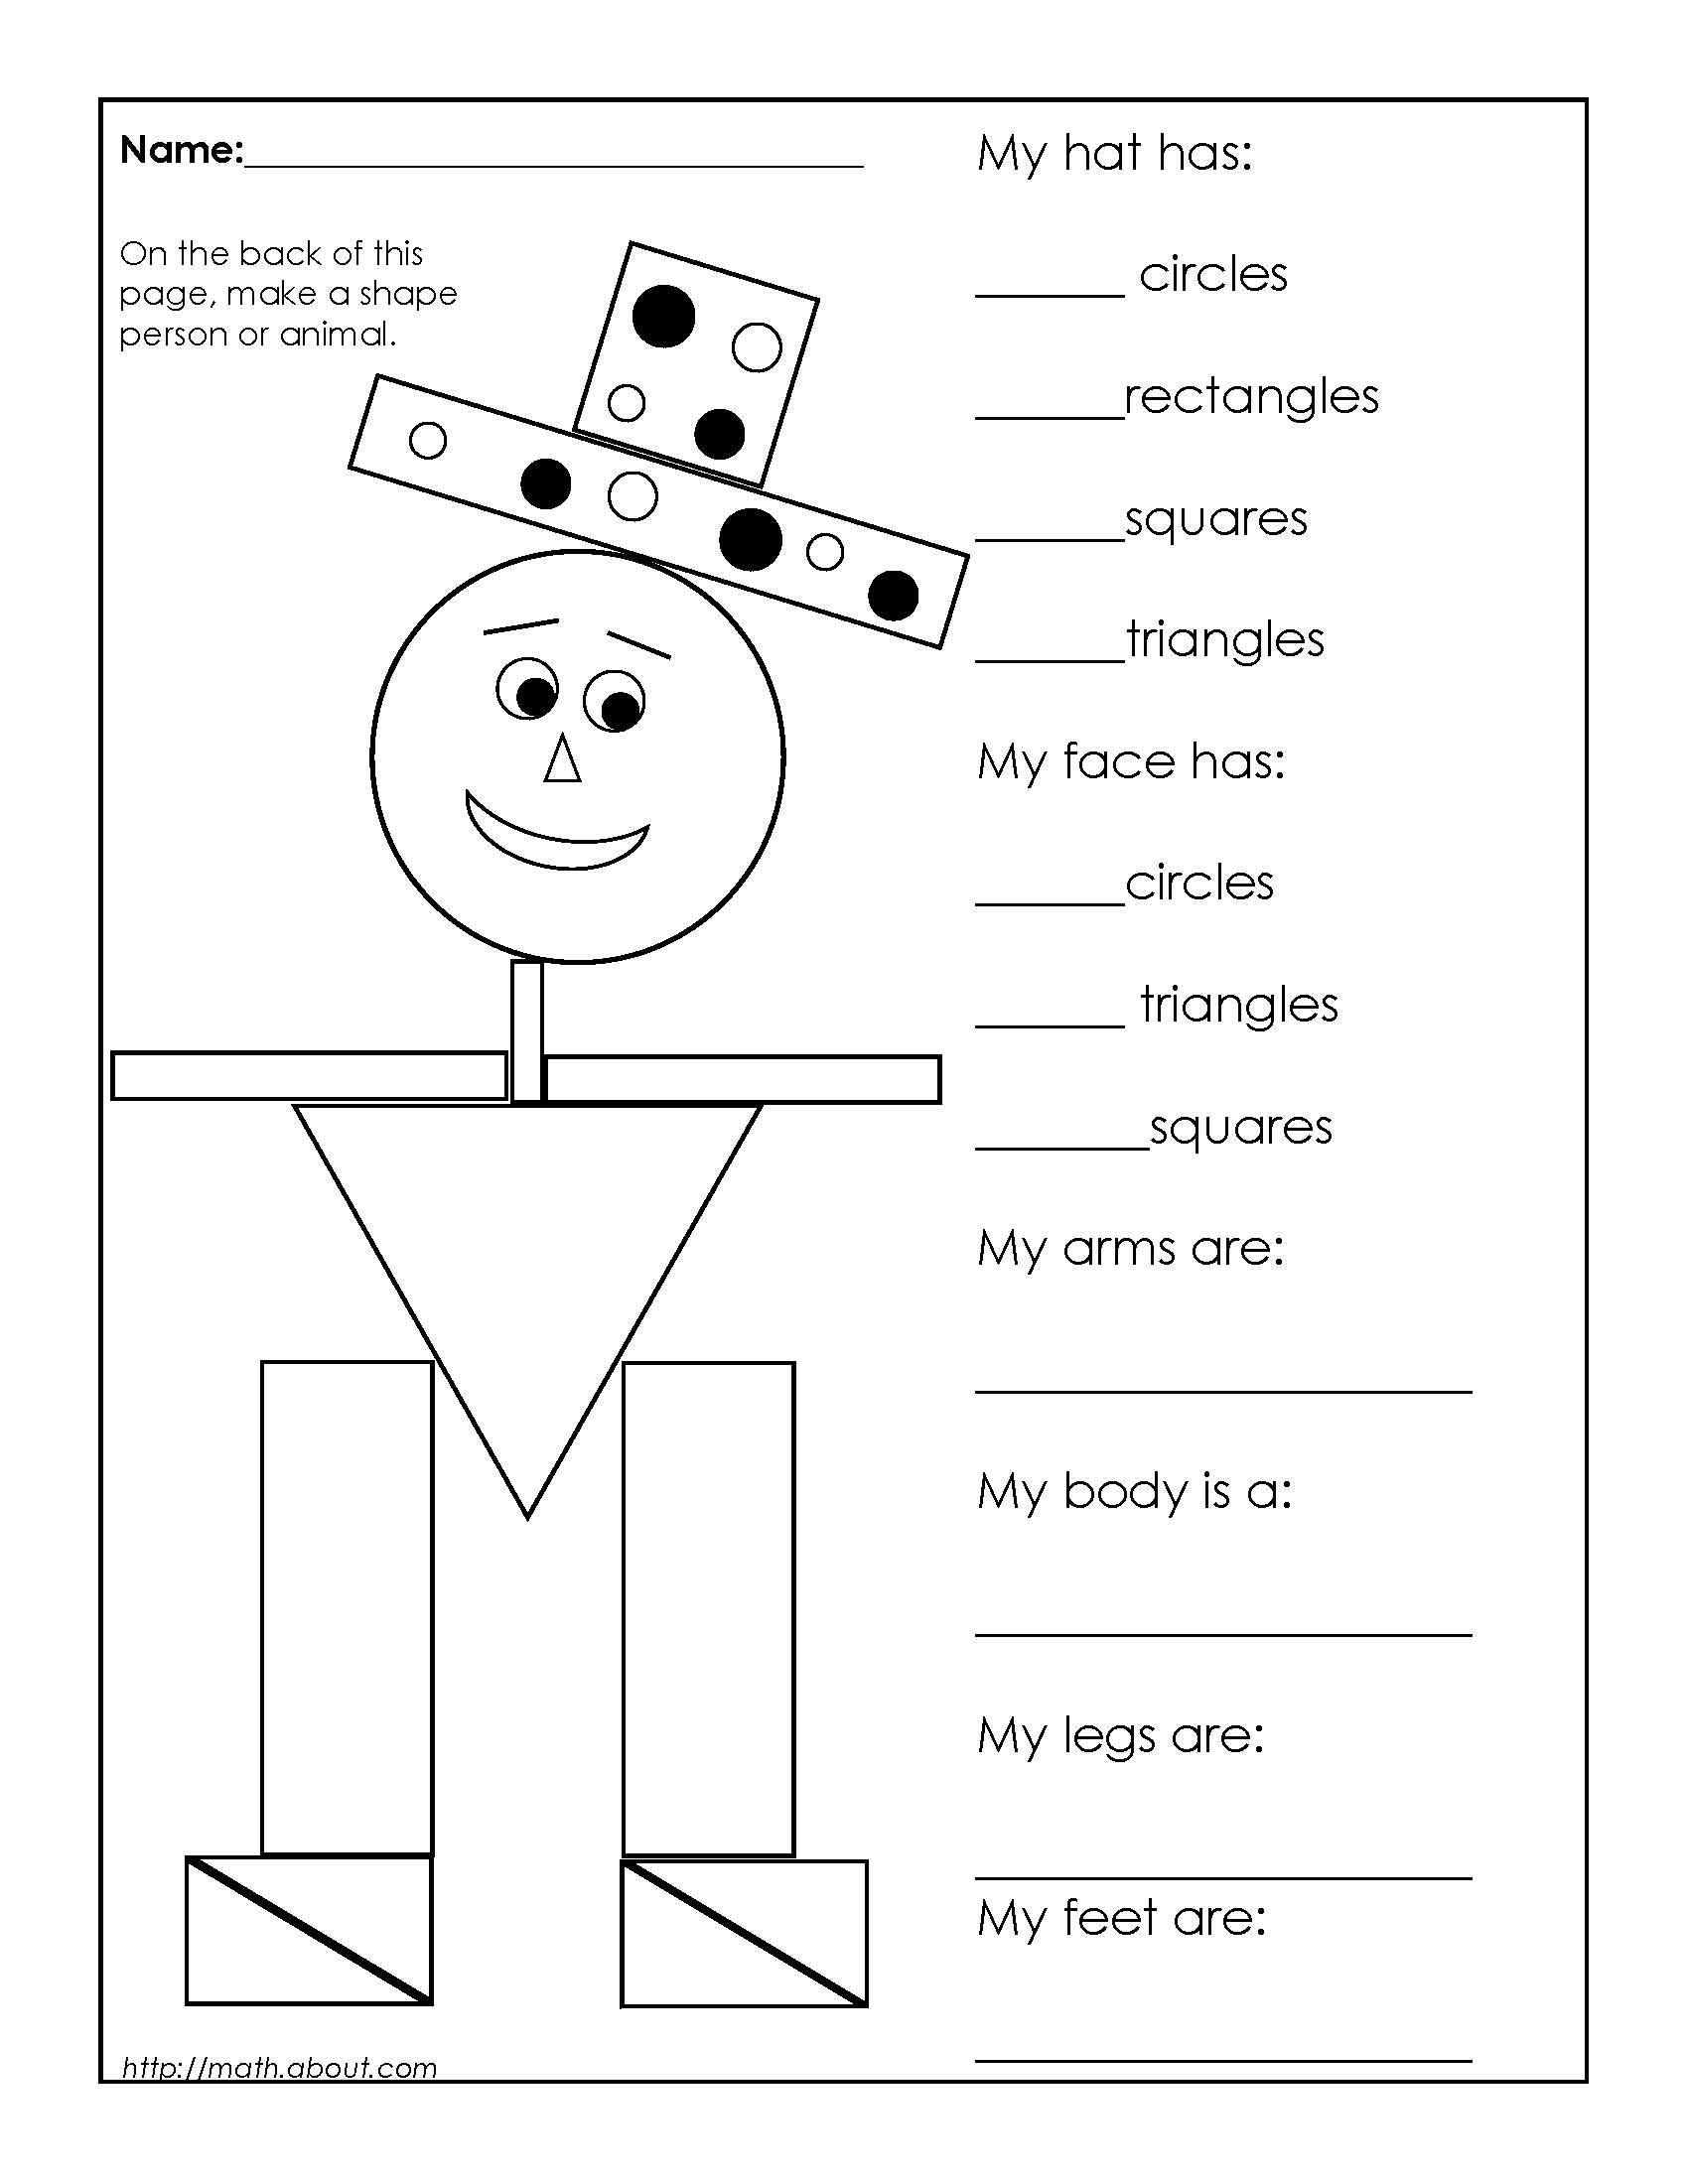 Kindergarten Practice Worksheets Along with 1st Grade Geometry Worksheets for Students